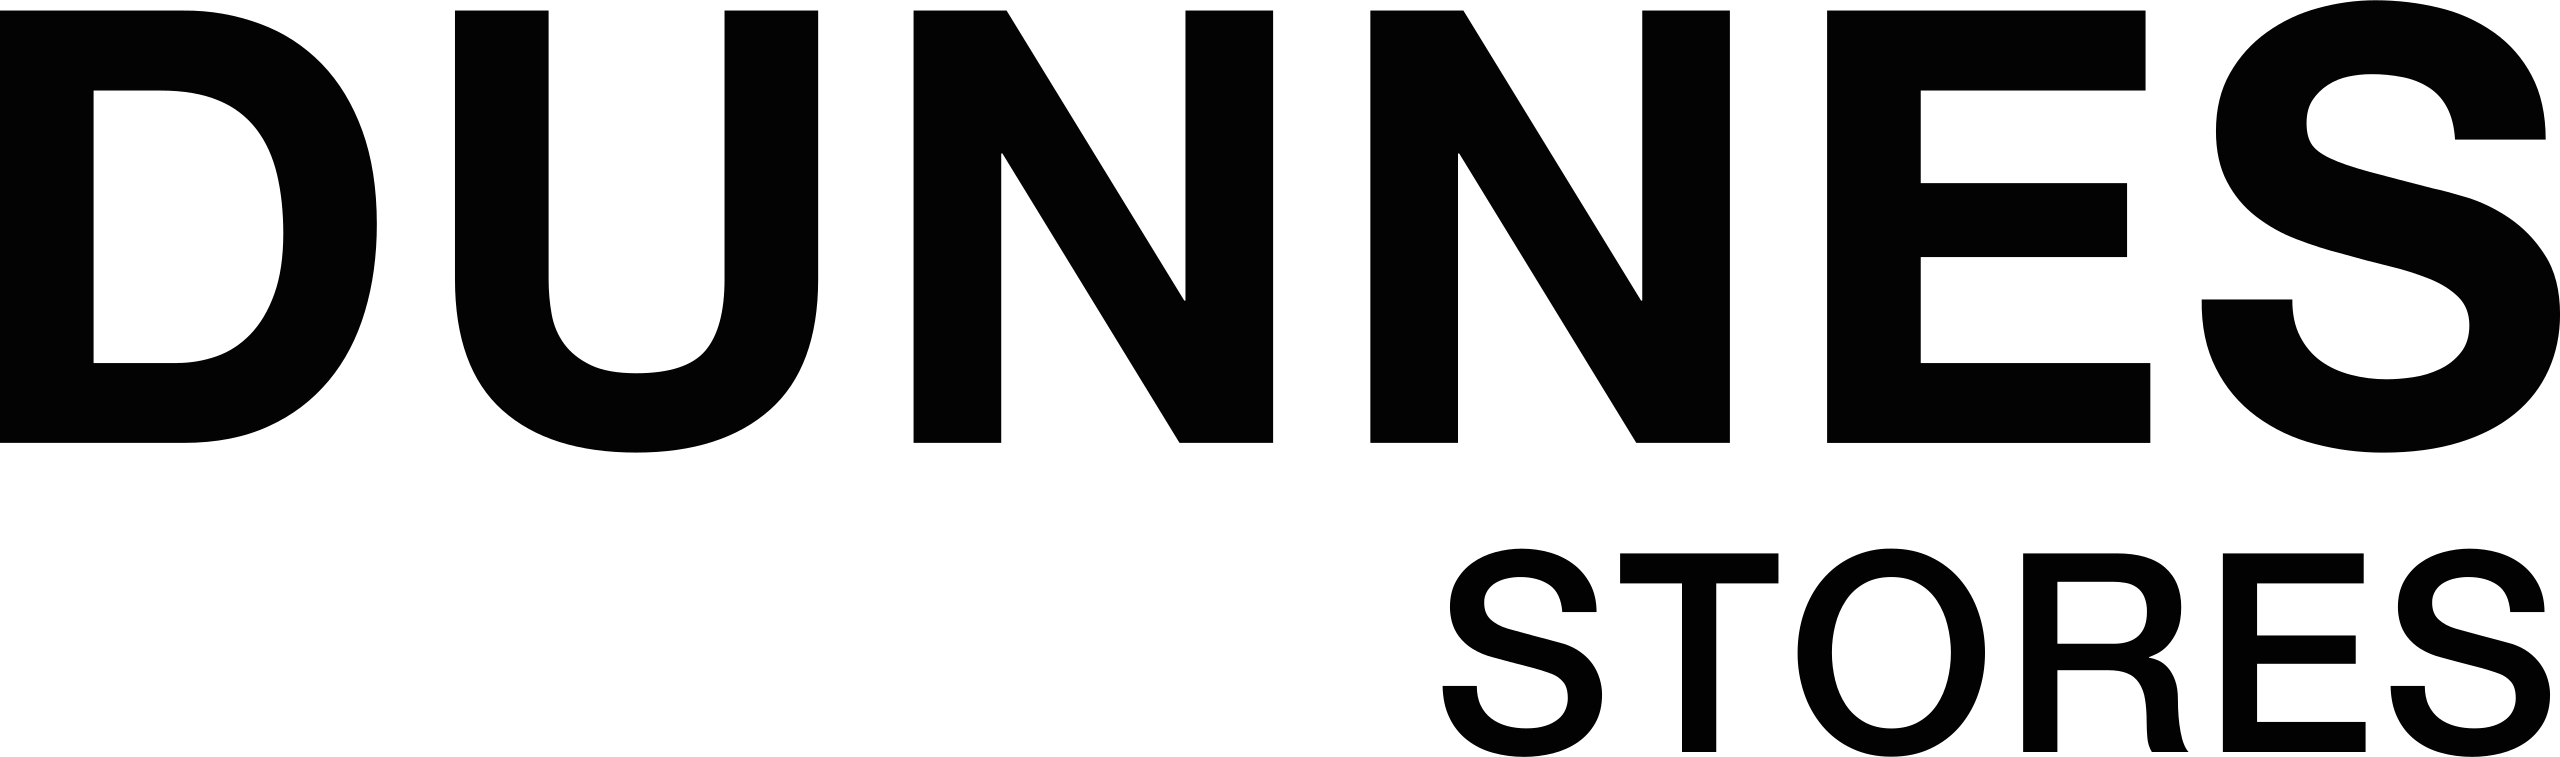 Dunnes Stores бренд. Ирландская фирма одежды Dunnes Stores. MIRSTORES логотип. Dunnes logo brend.